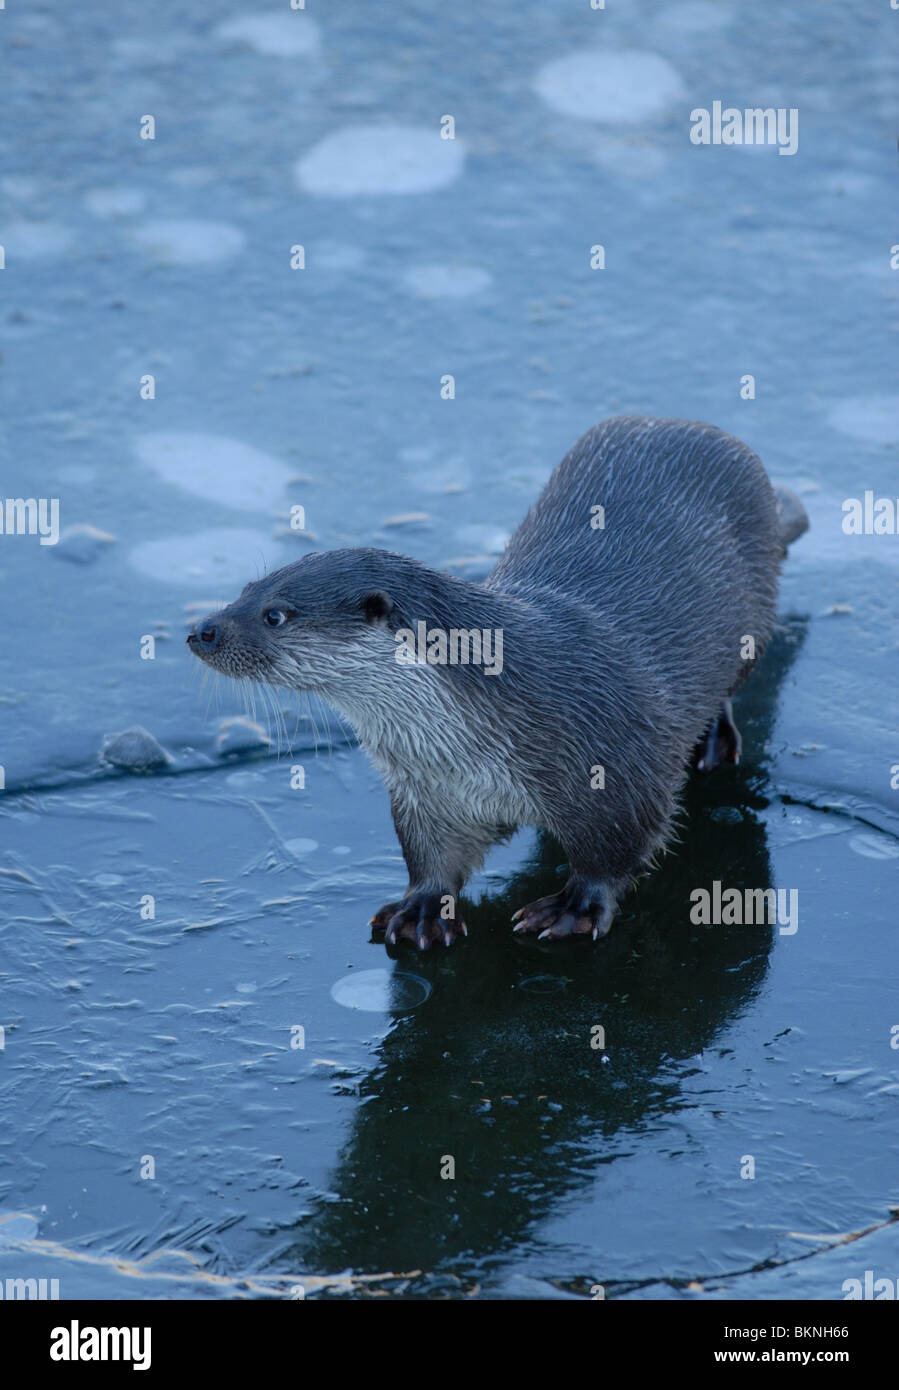 Female Otter near frozen hole in ice Stock Photo